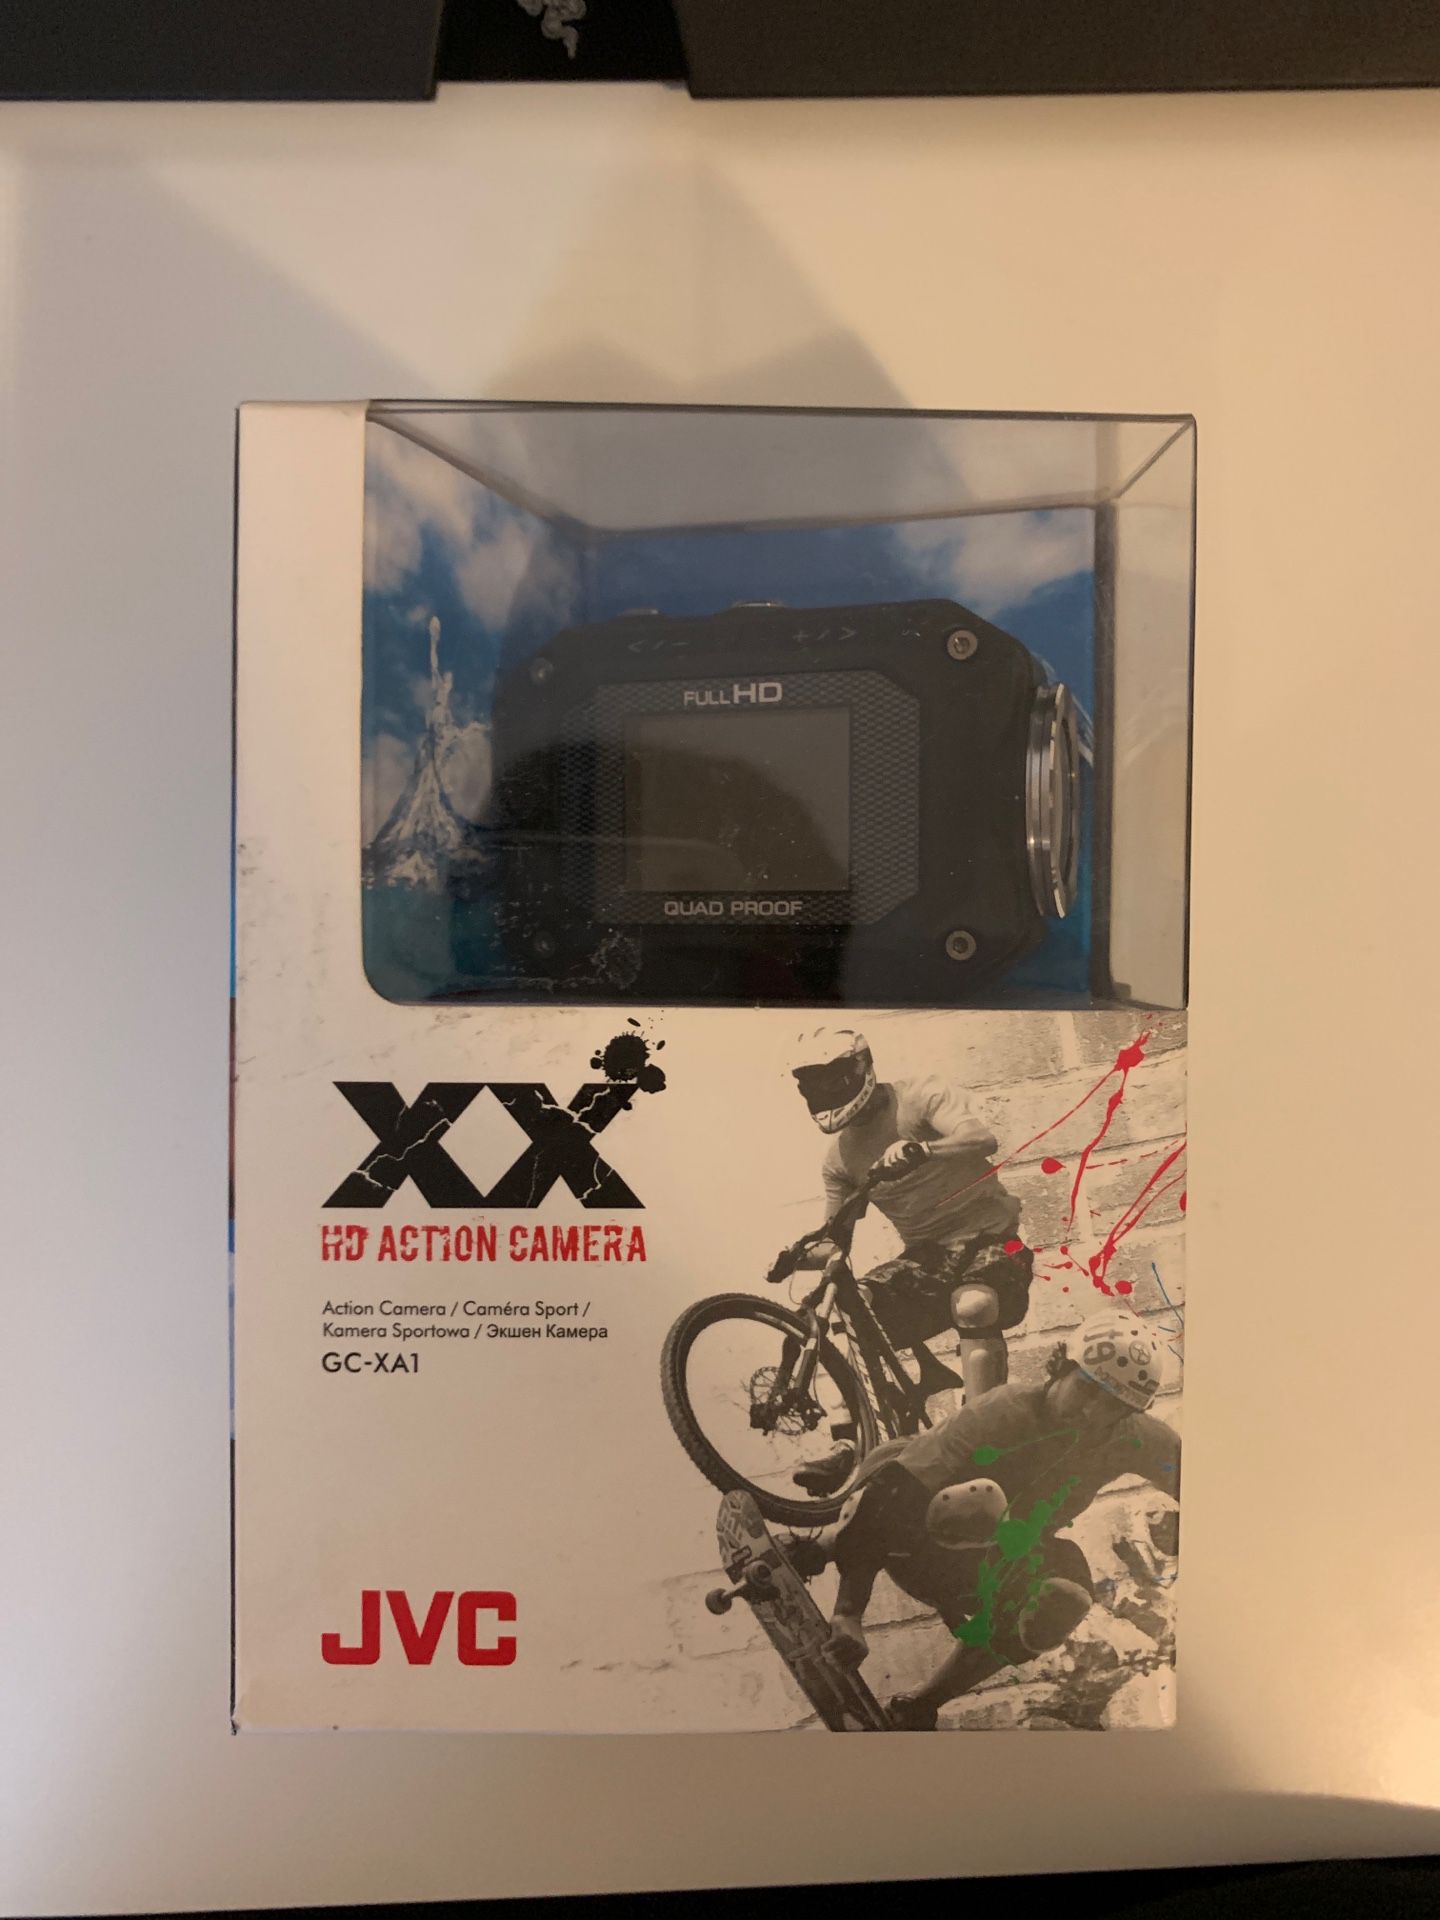 JVC HD Action Camera